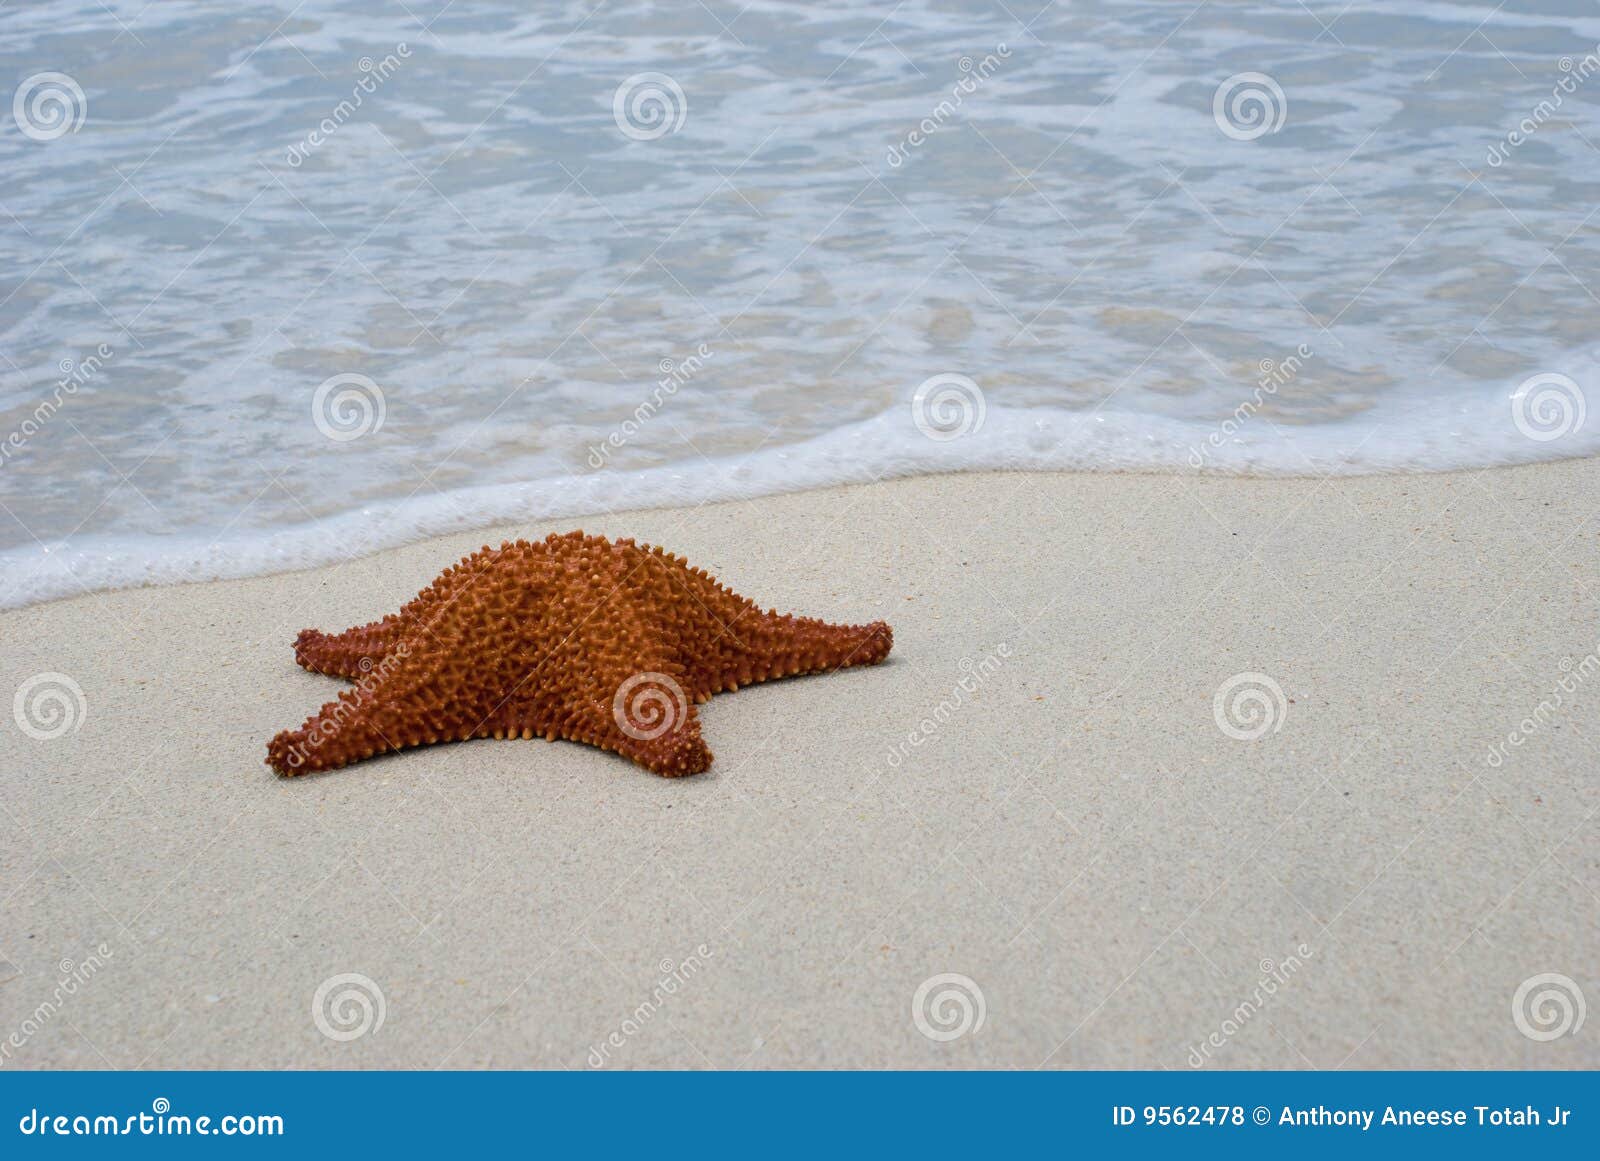 reticulated seastar (starfish) on beach